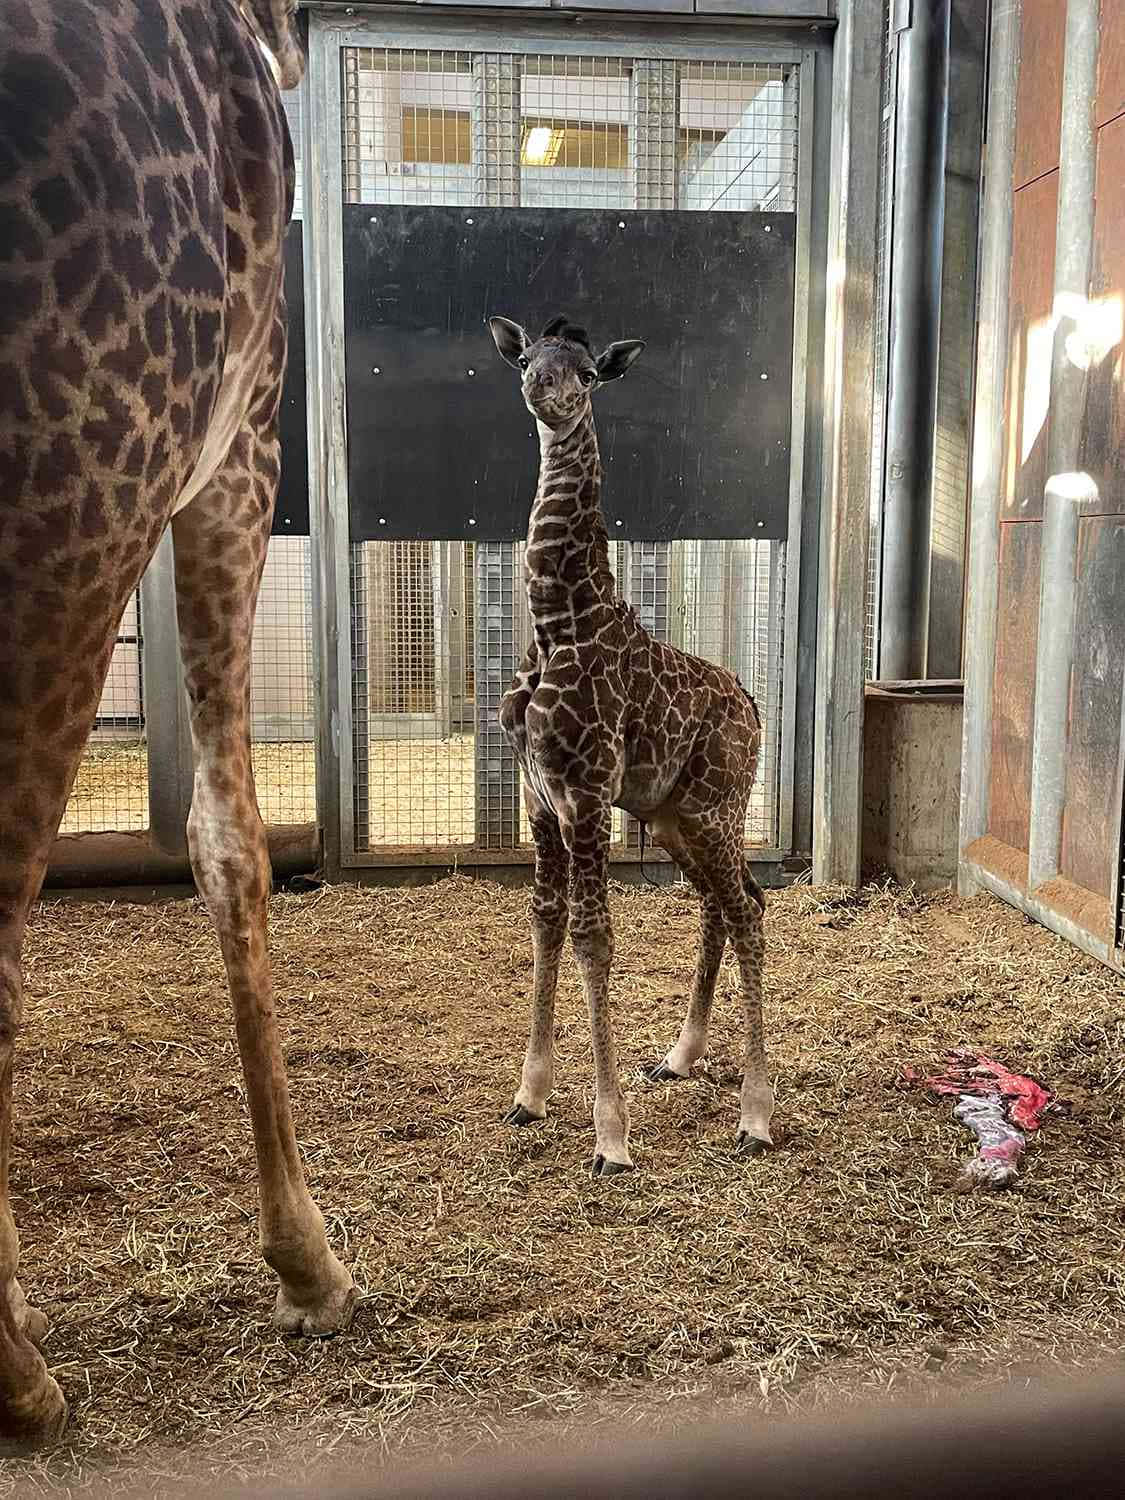 Cute Baby Giraffe